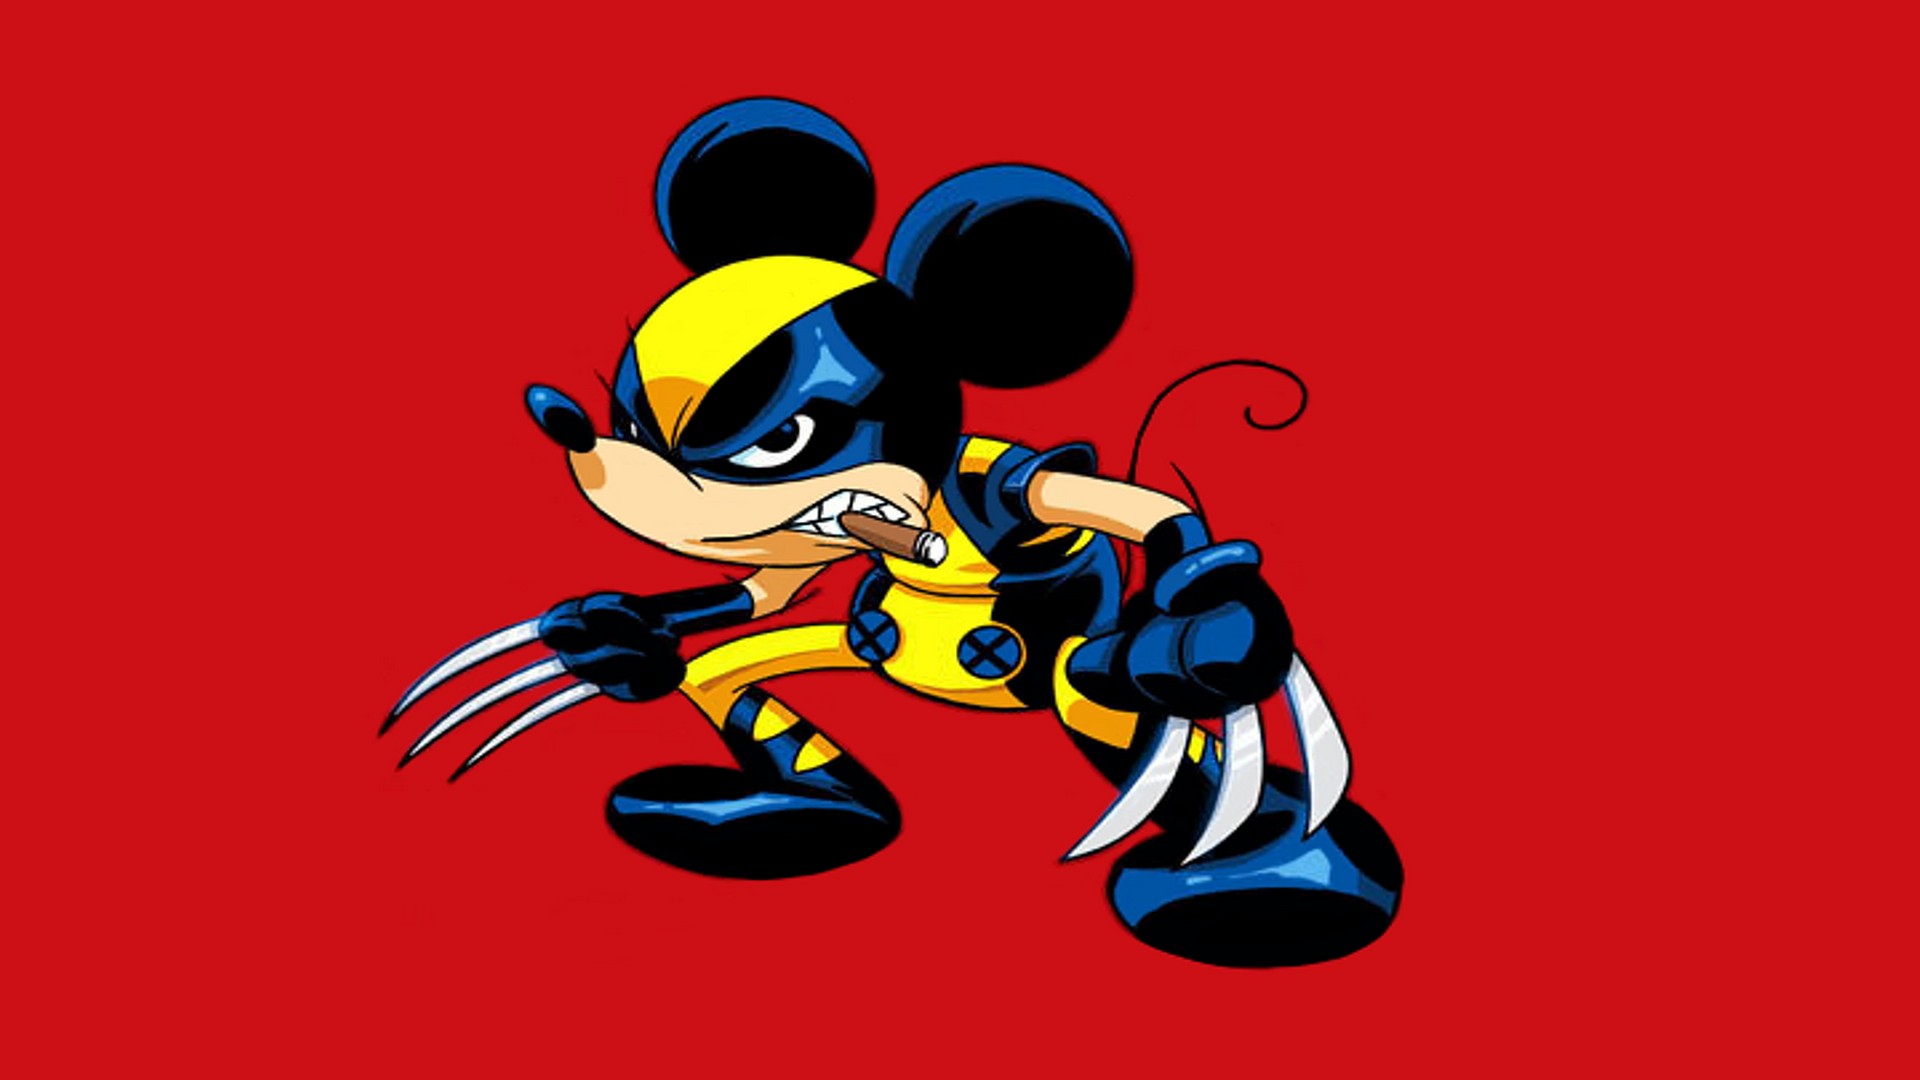 mickey mouse wallpaper for mobile,animated cartoon,cartoon,fictional character,animation,superhero